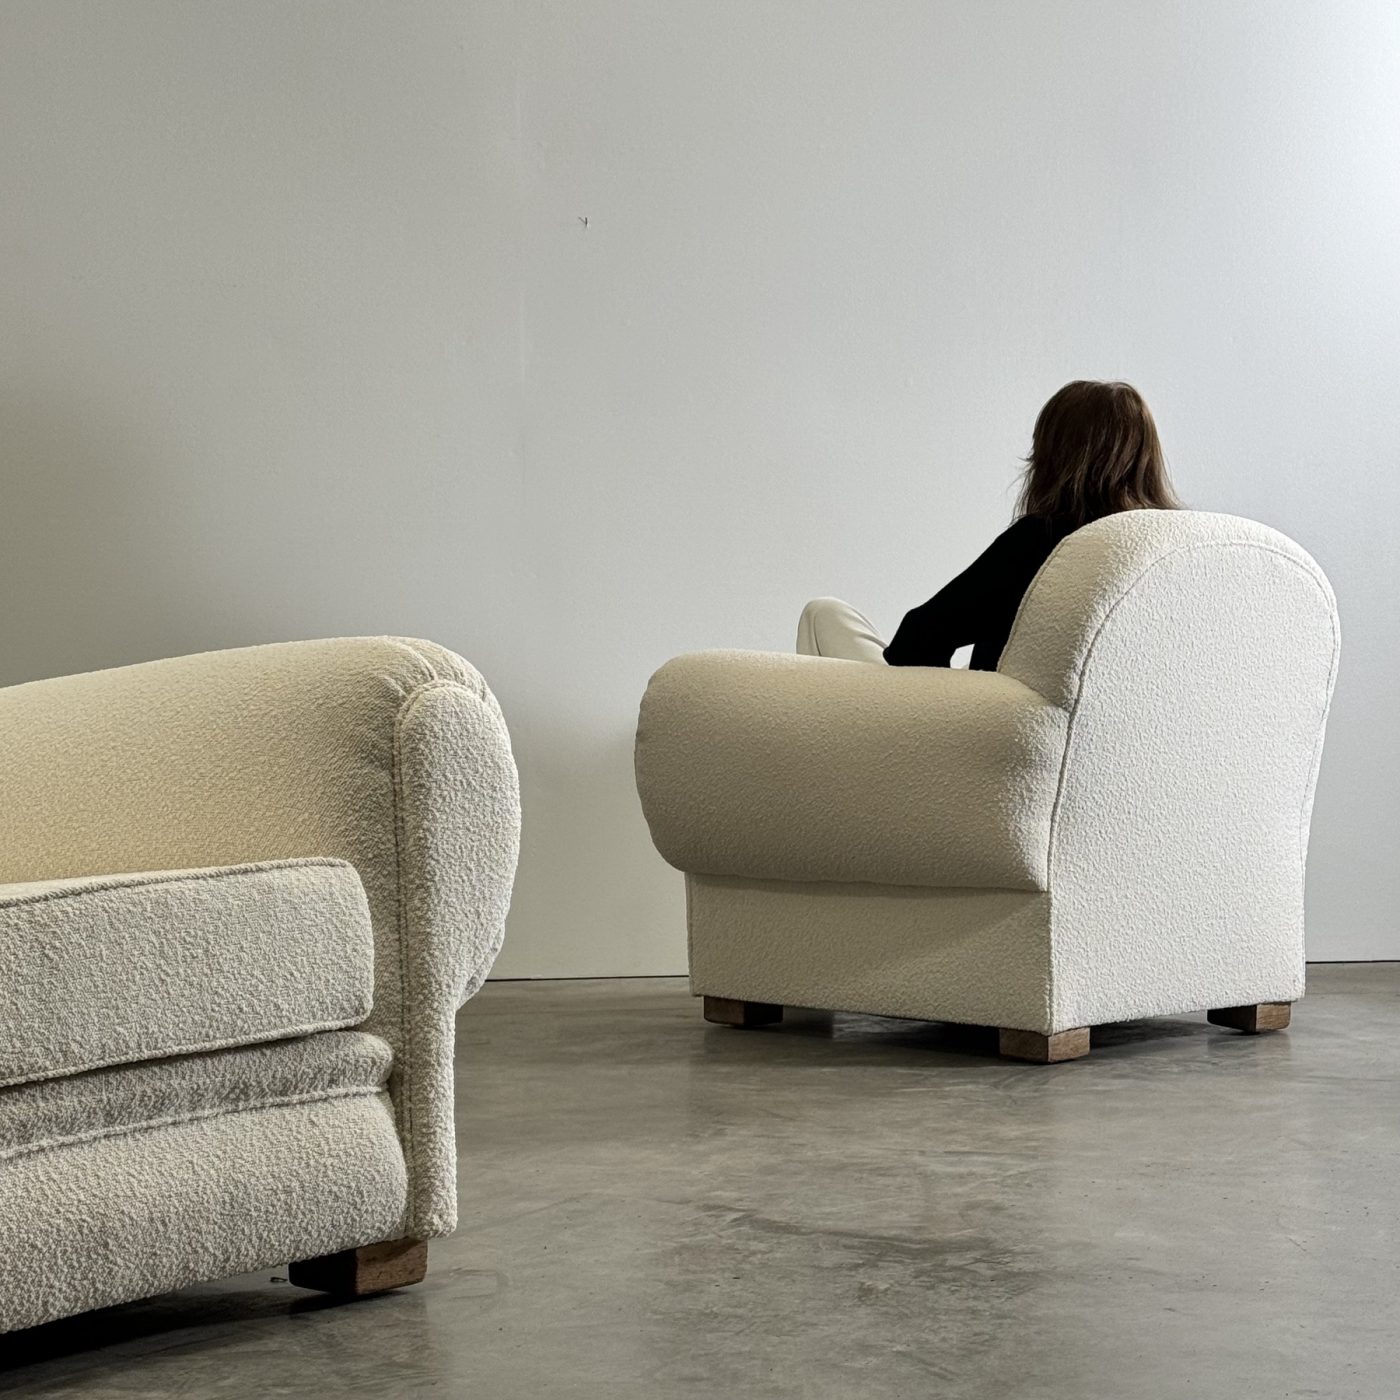 objet-vagabond-club-armchairs0000